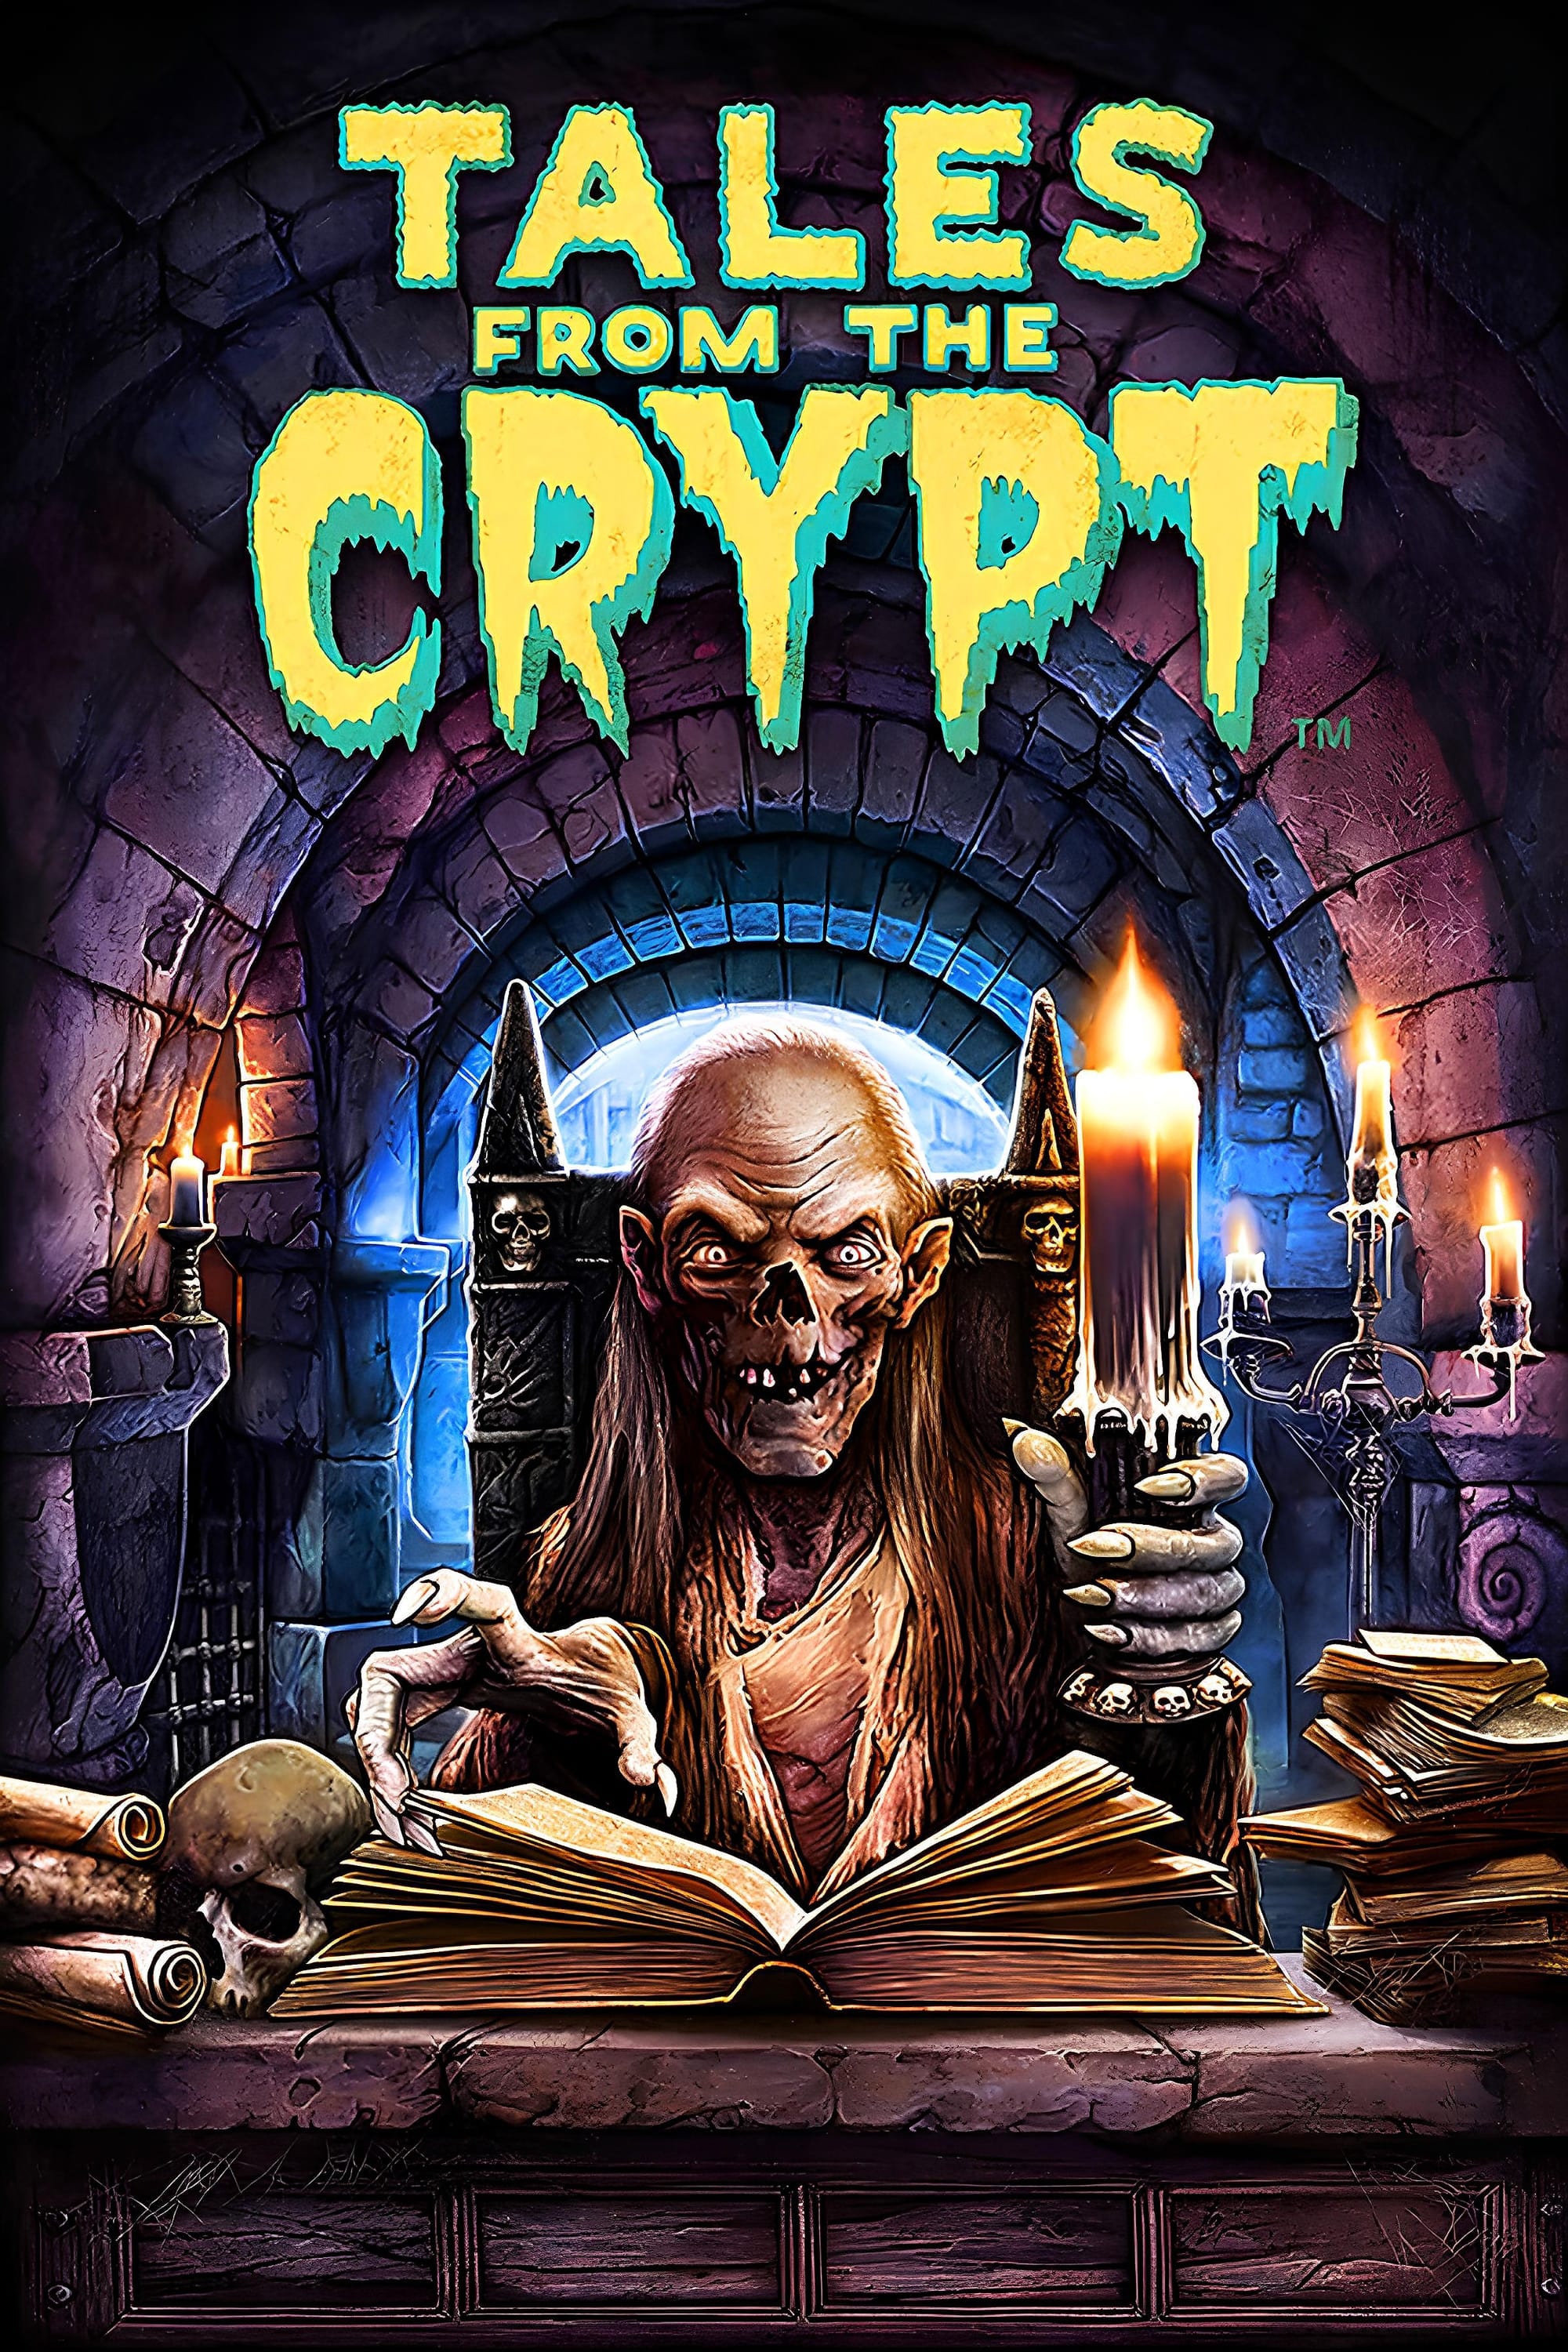 Les Contes de la crypte (1989)